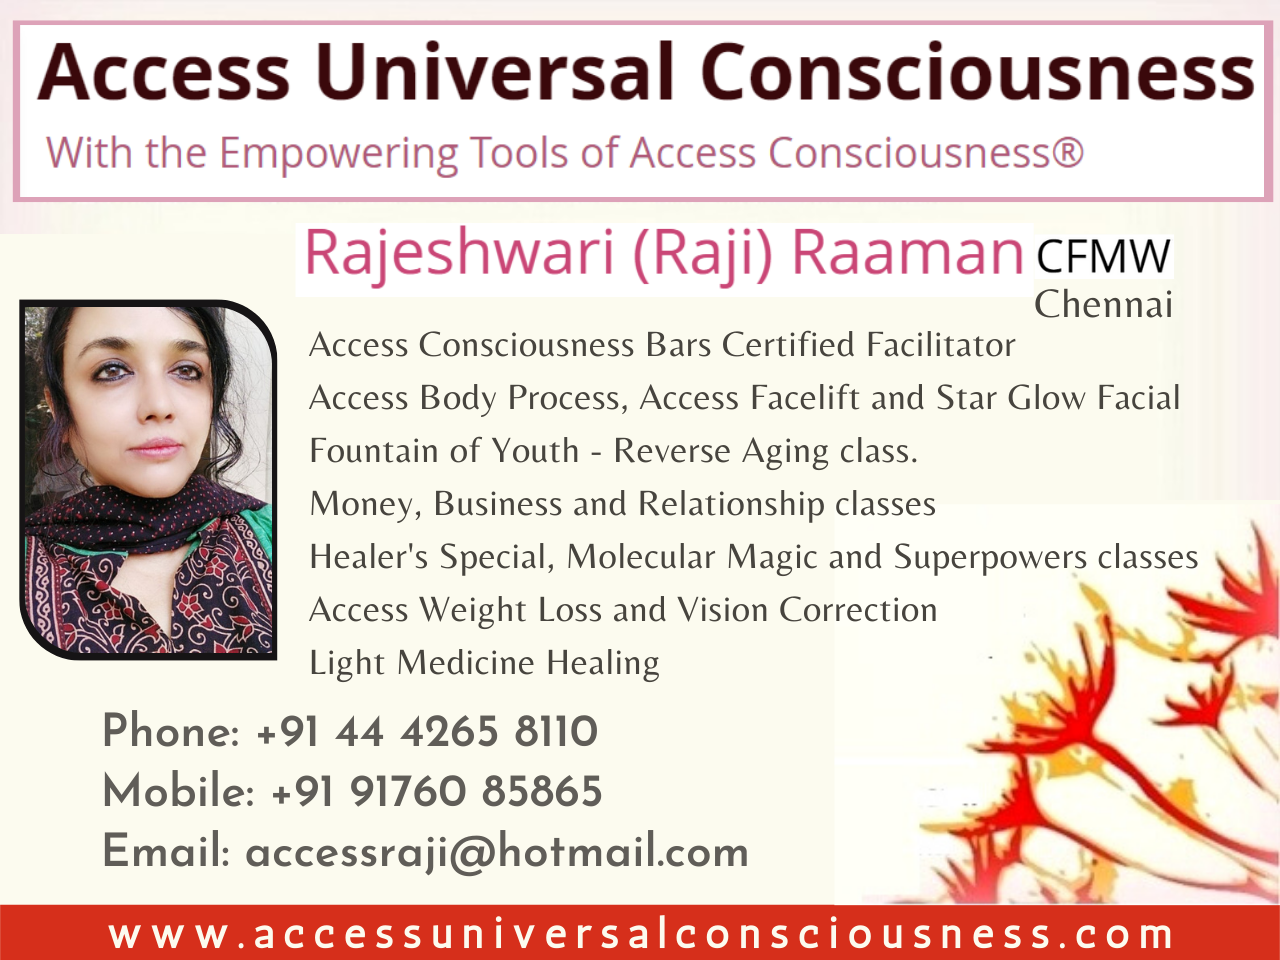 Raji Raaman, Access Consciousness bars and body process Facilitator - Chennai